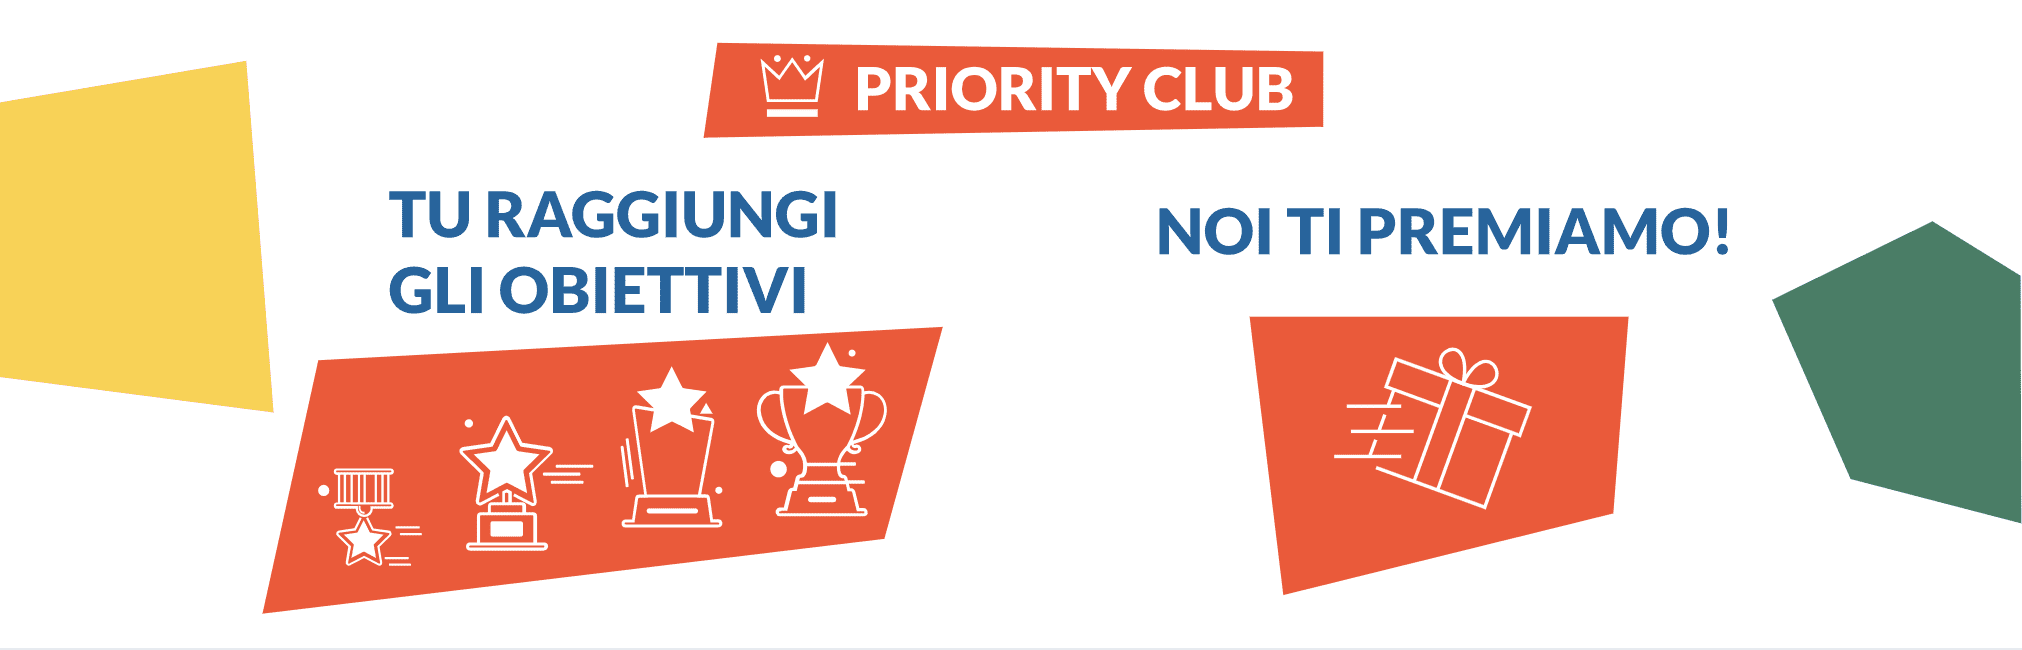 priority club eurobet